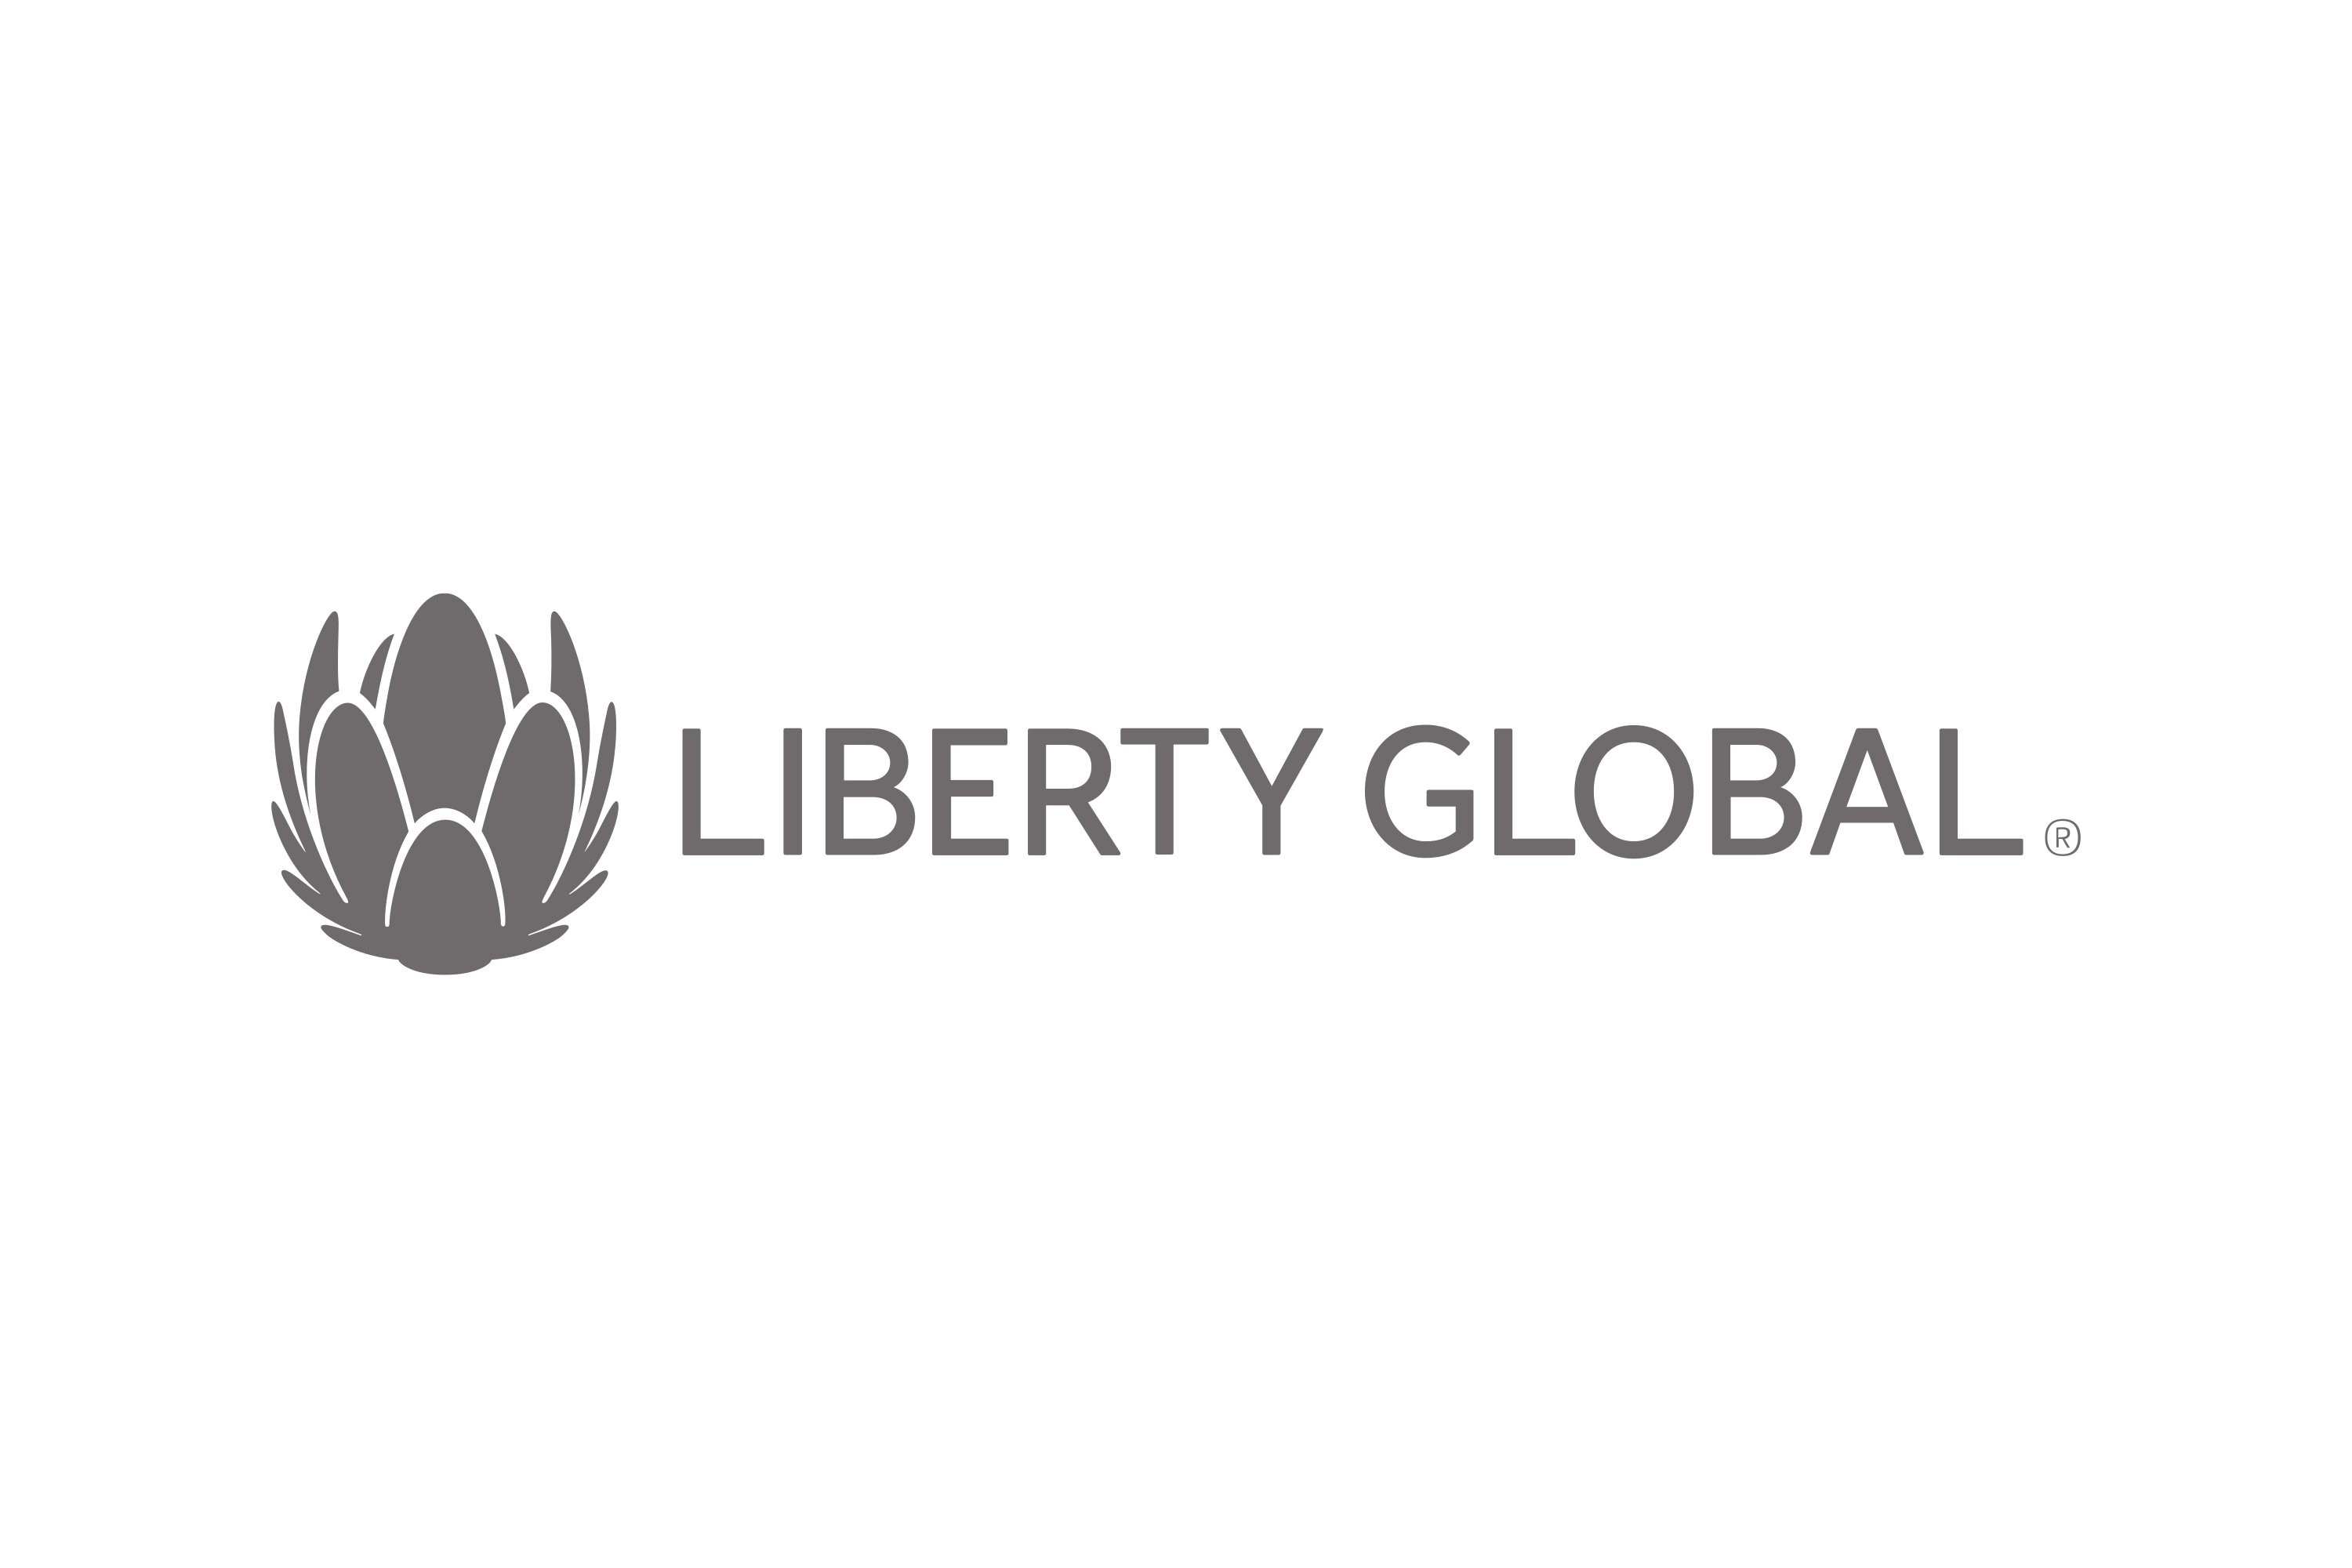 Liberty darknet market